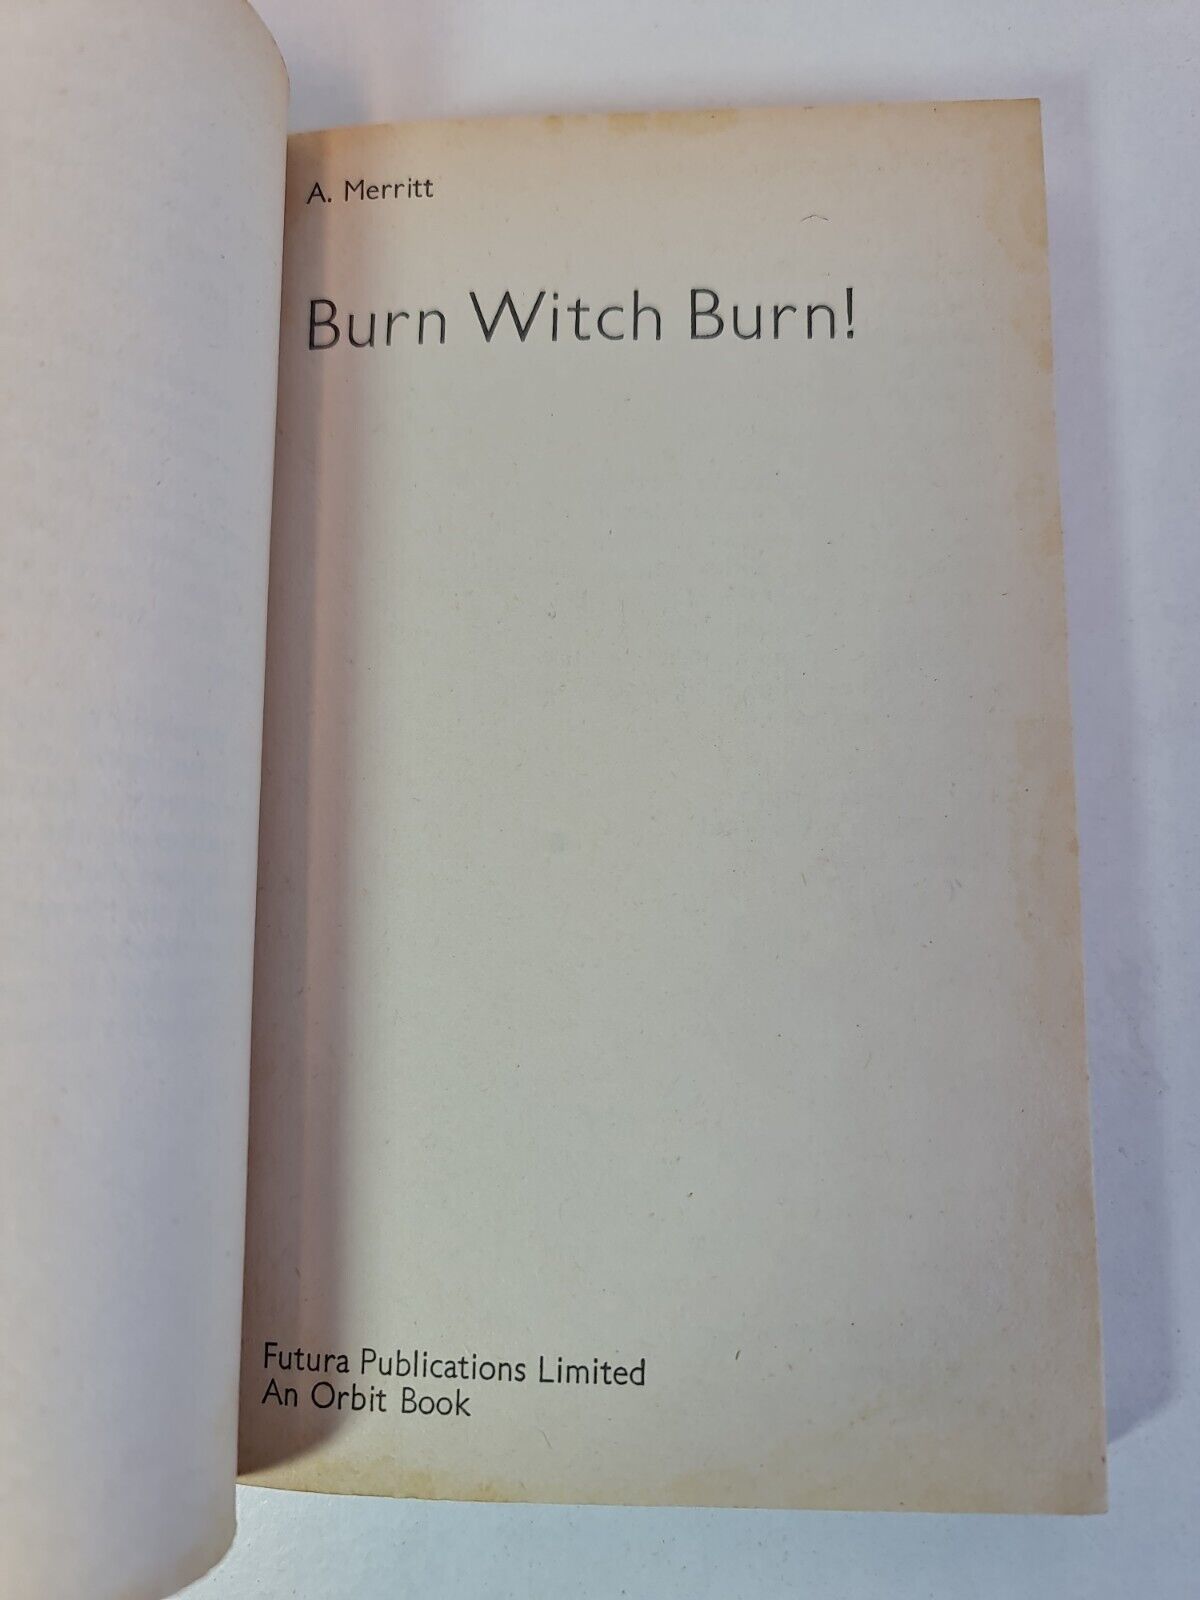 Burn Witch Burn! by Abraham Merritt (1974)